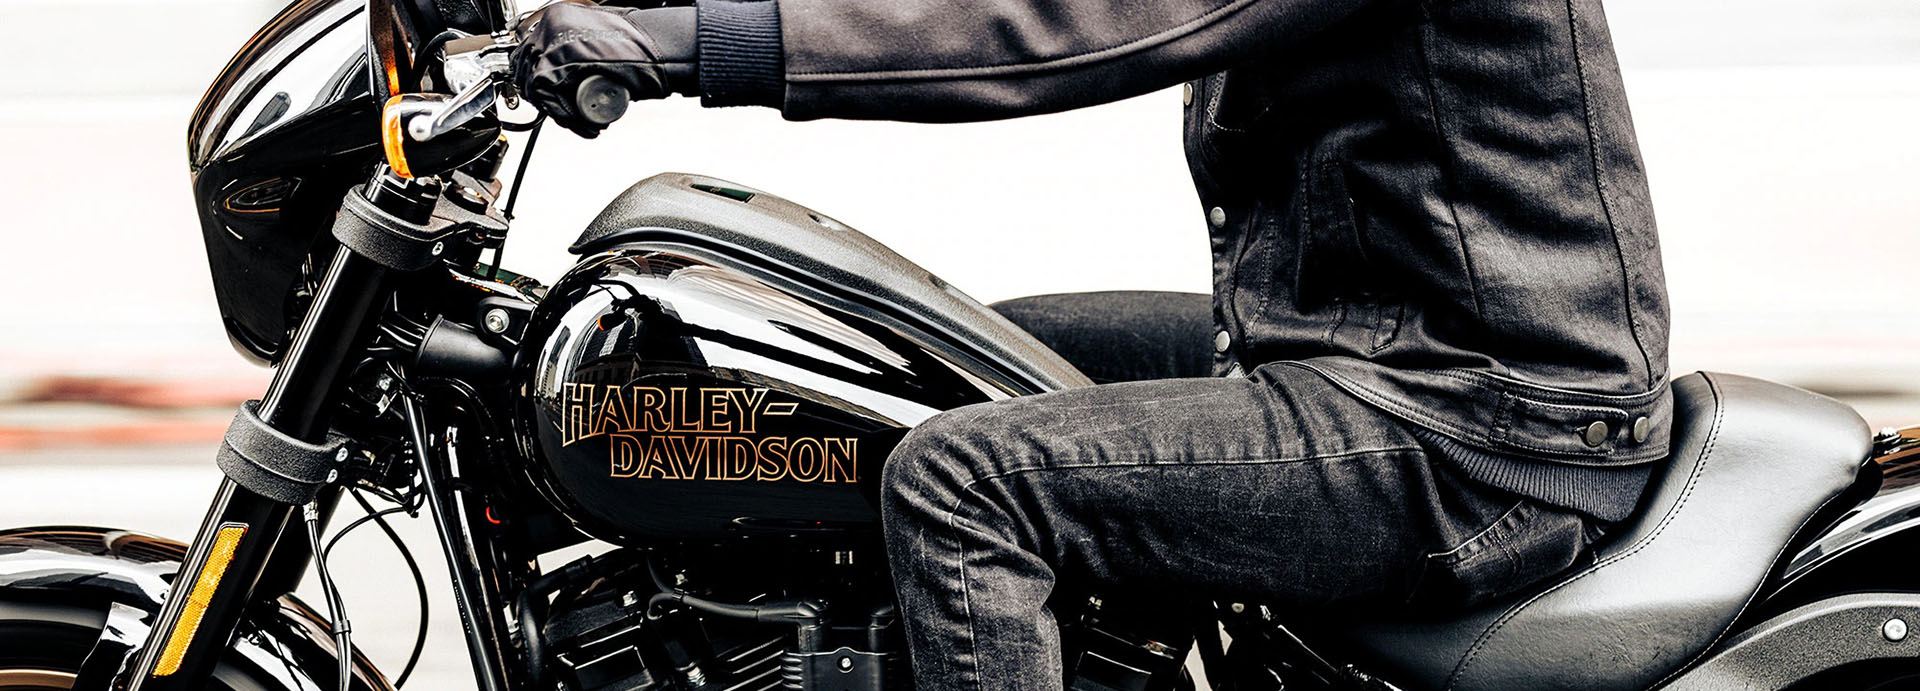 2022 Harley-Davidson Low Rider® S in Winston Salem, North Carolina - Photo 4